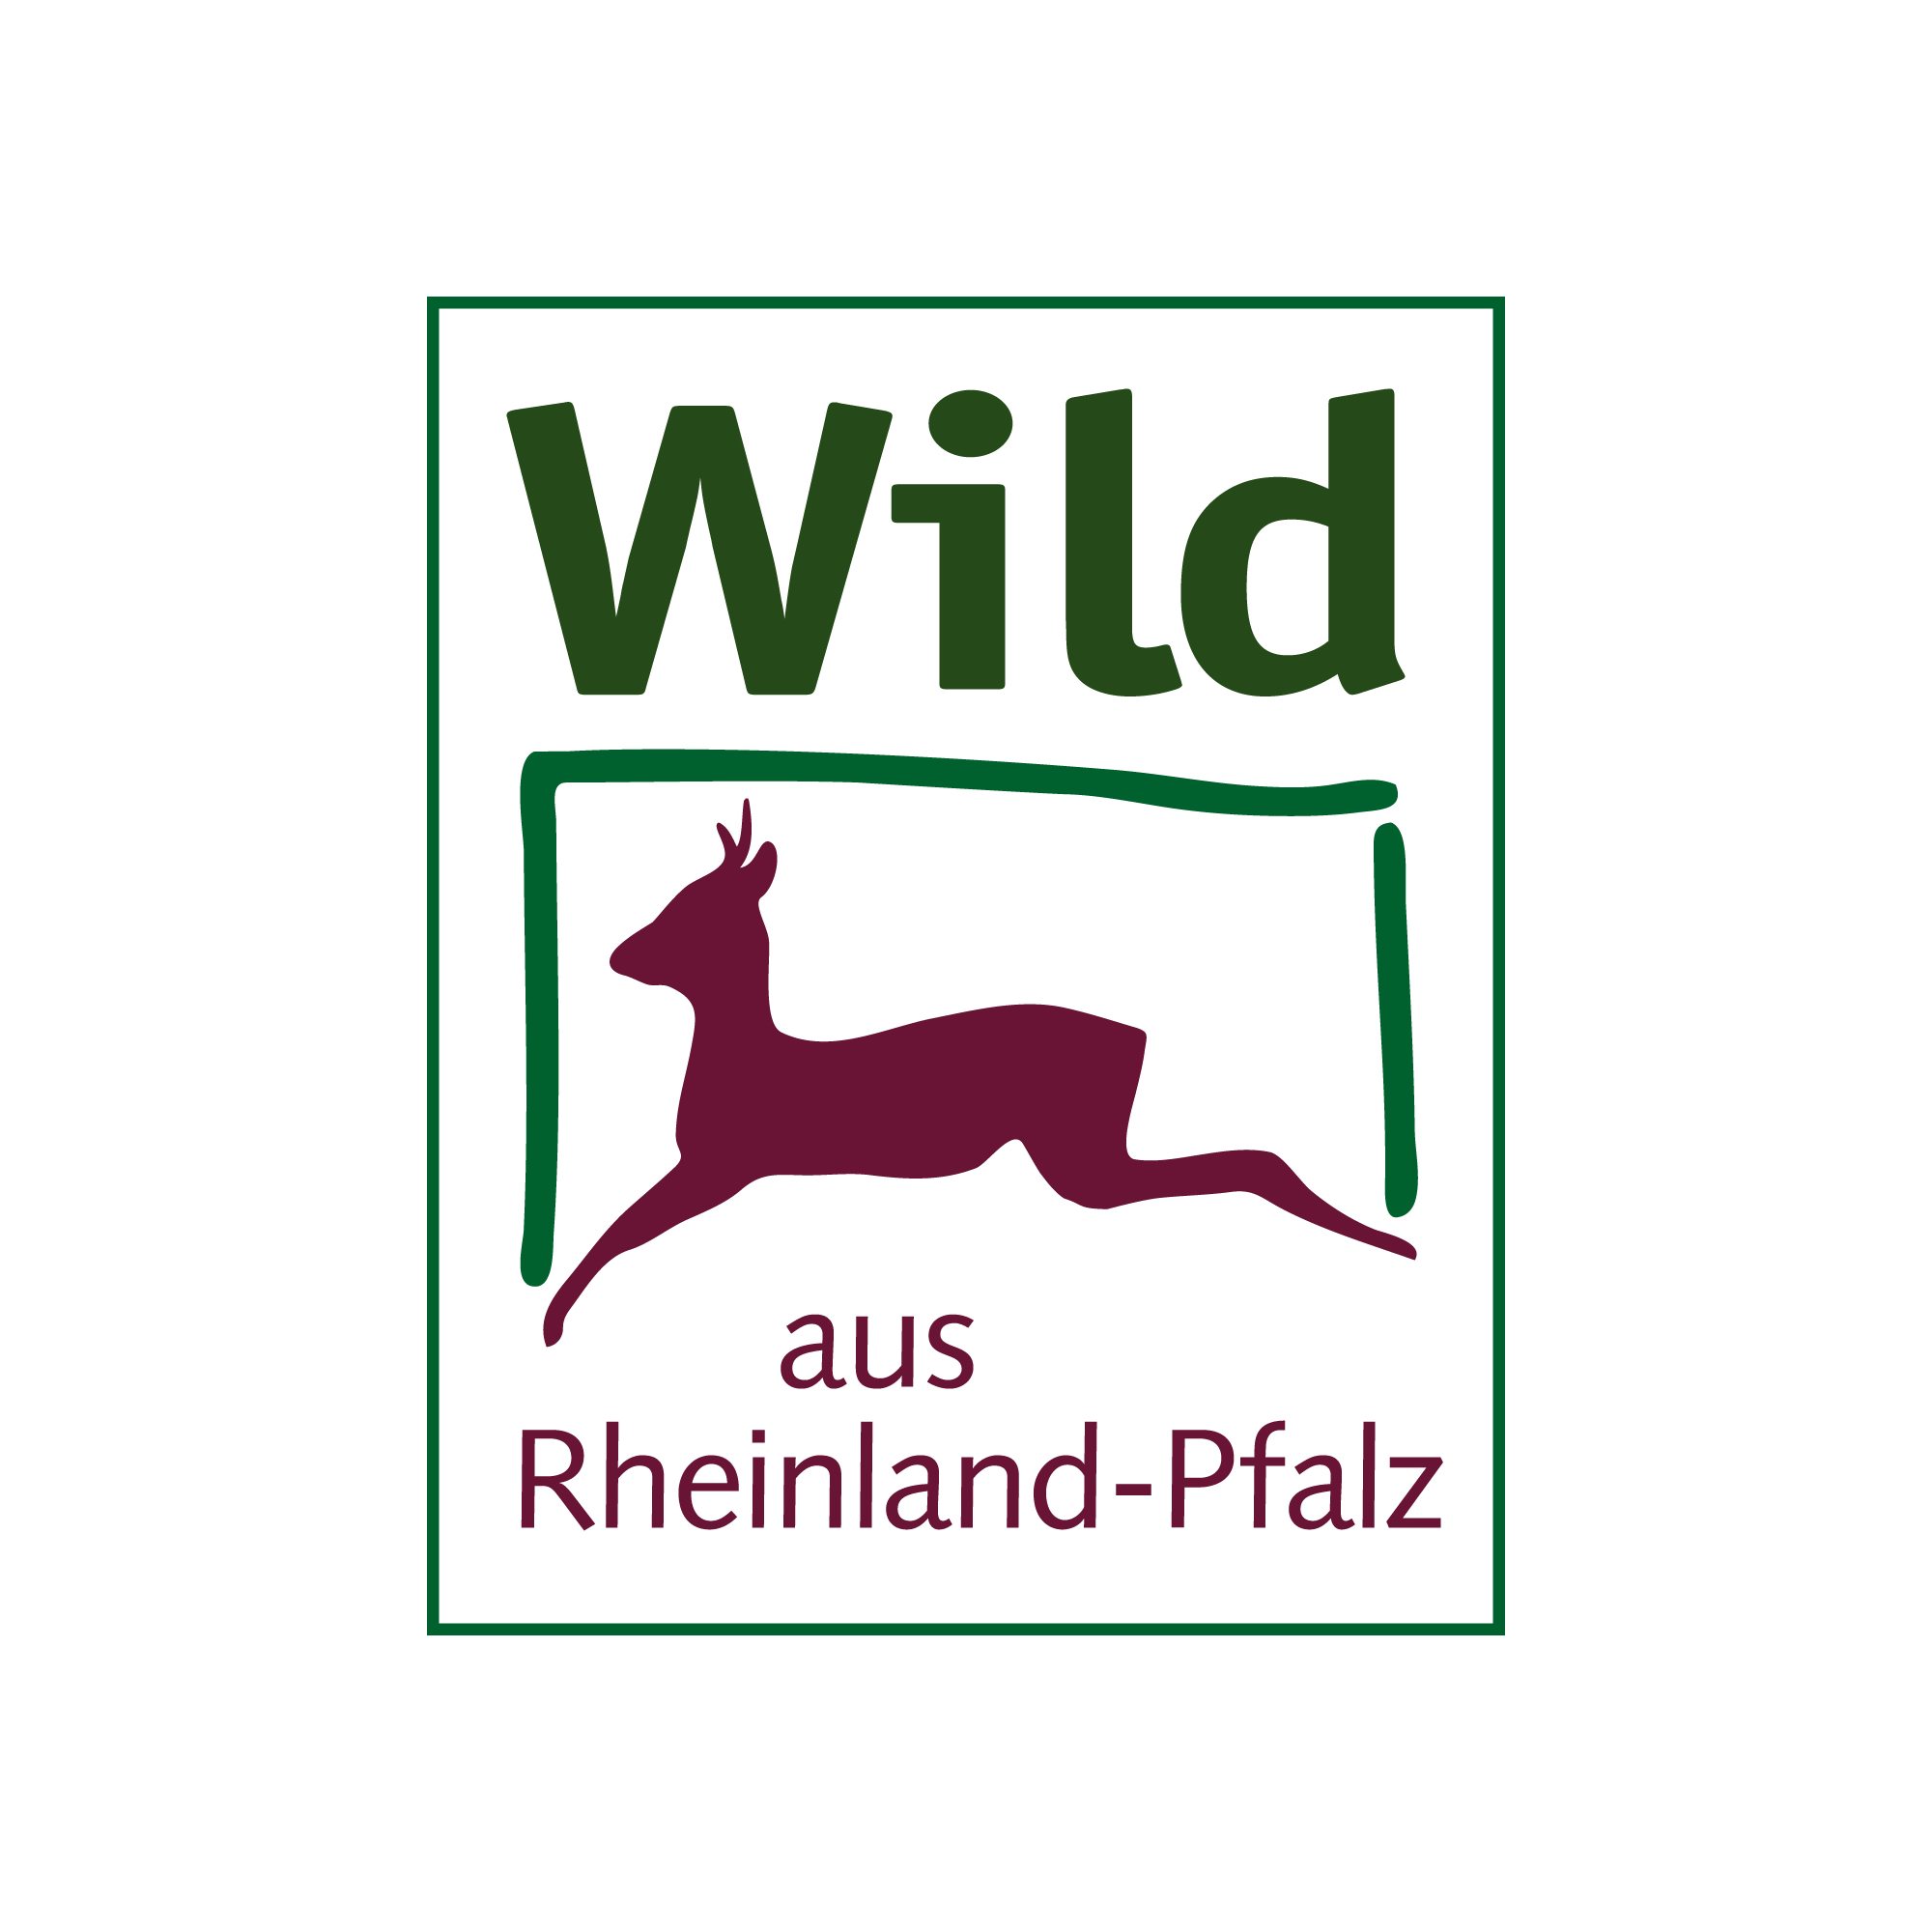 Logo Wild aus Rheinland-Pfalz